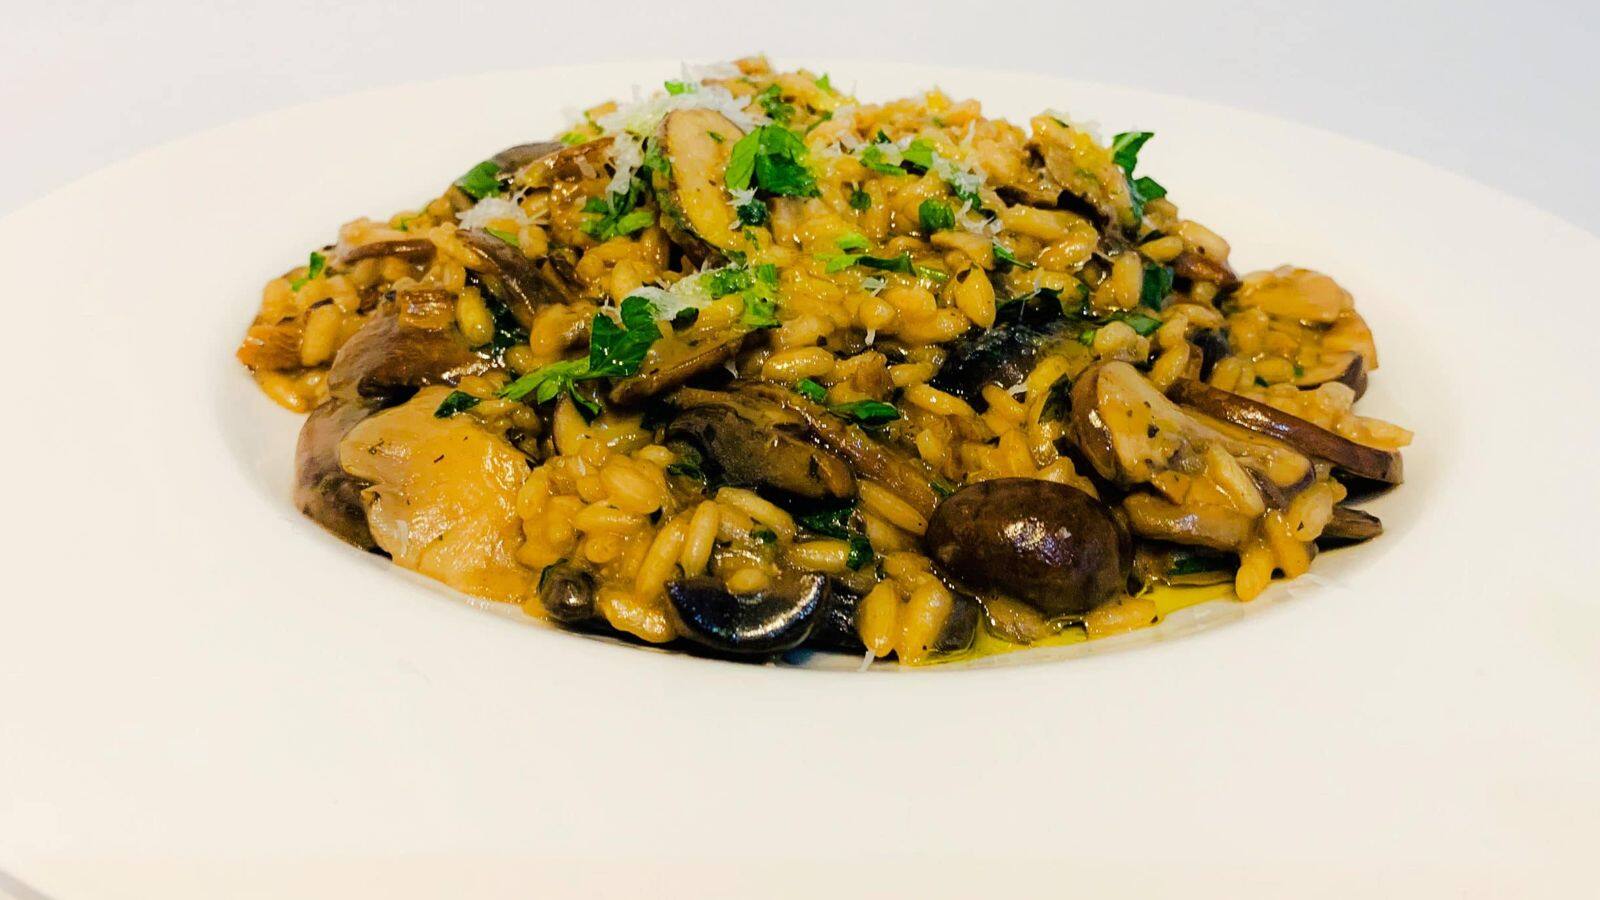 Italian wild mushroom risotto recipe in 4 simple steps